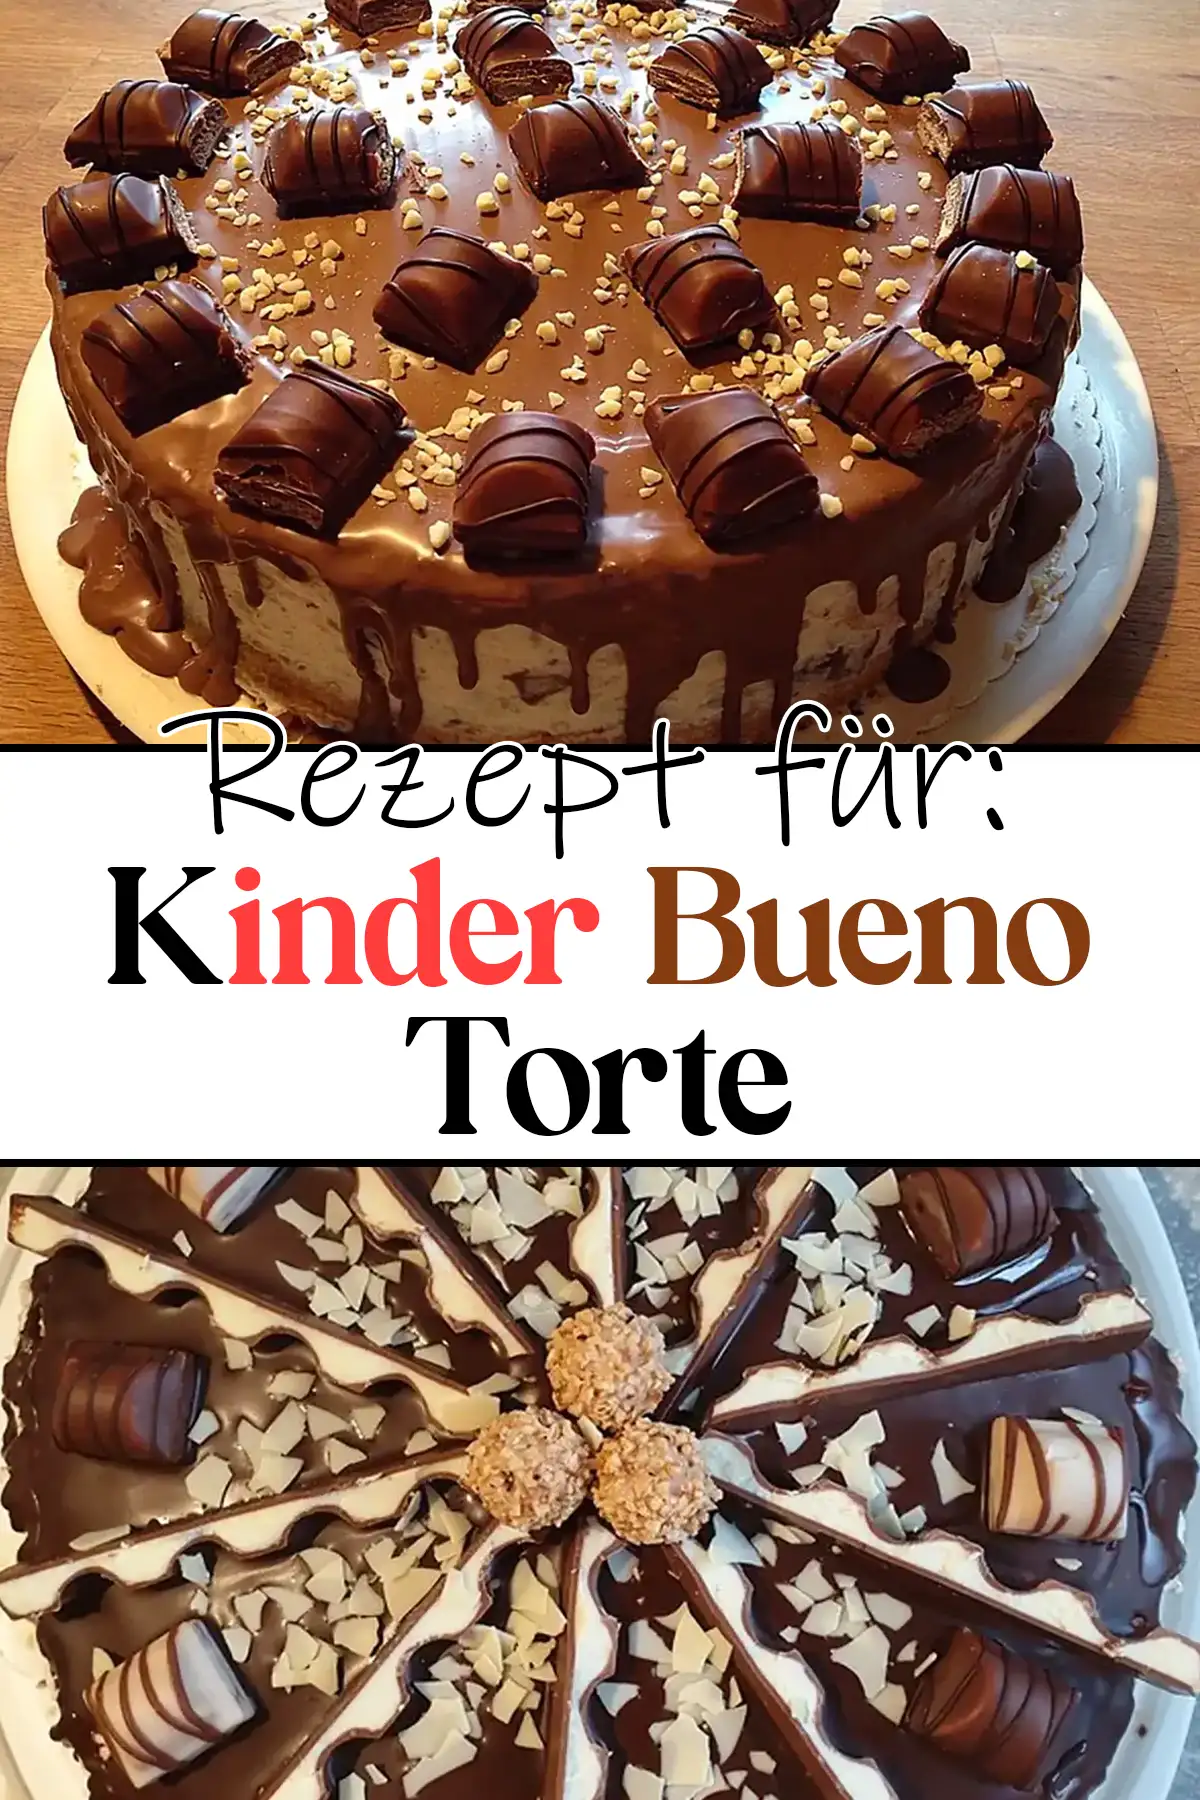 Kinder Bueno-Torte Rezept